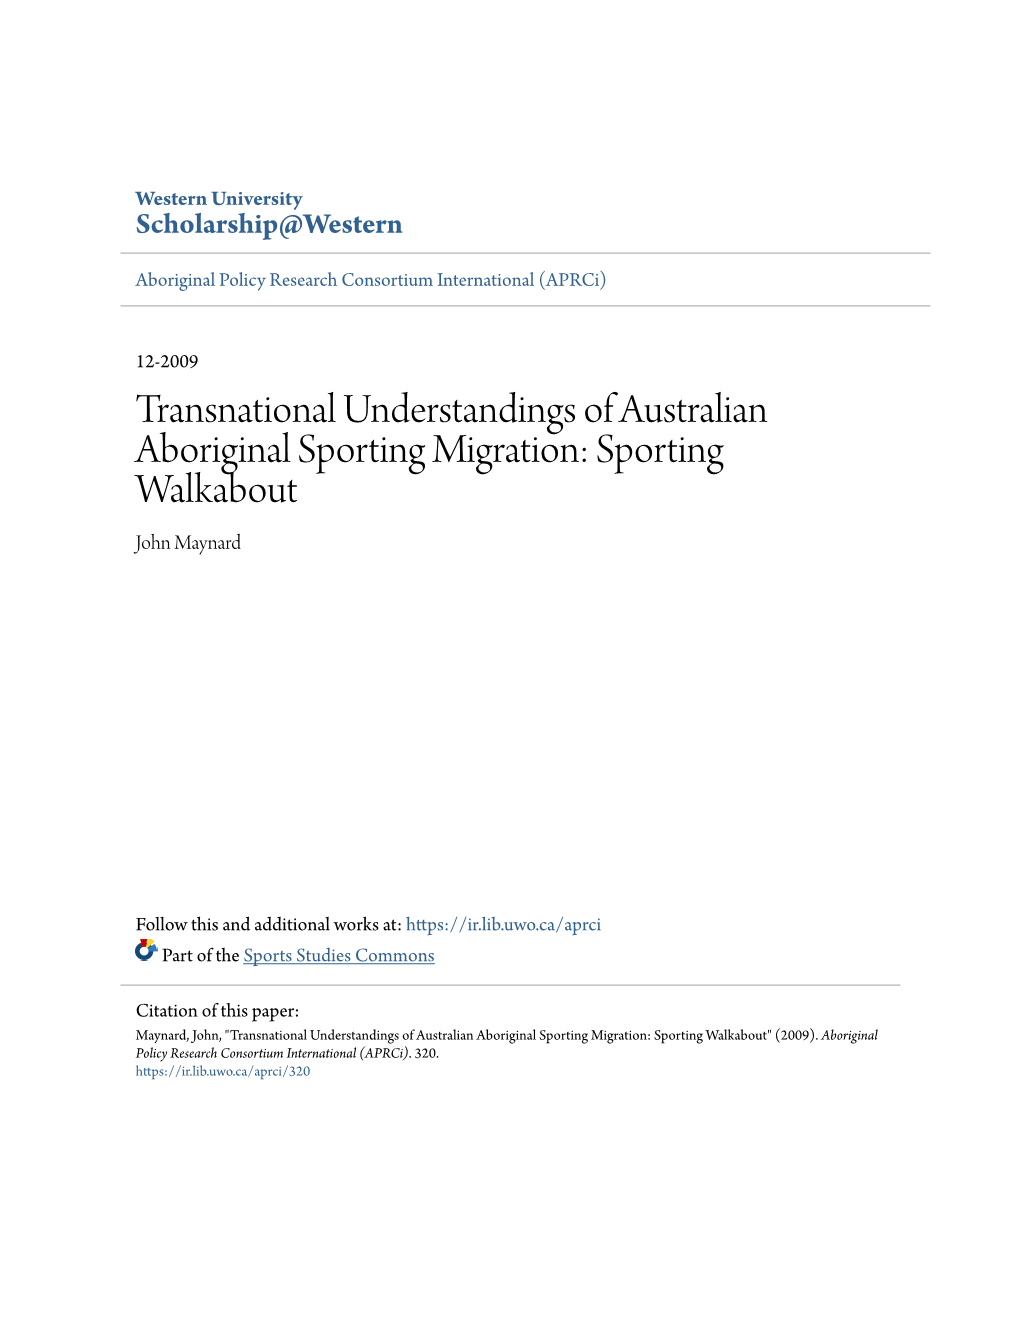 Transnational Understandings of Australian Aboriginal Sporting Migration: Sporting Walkabout John Maynard